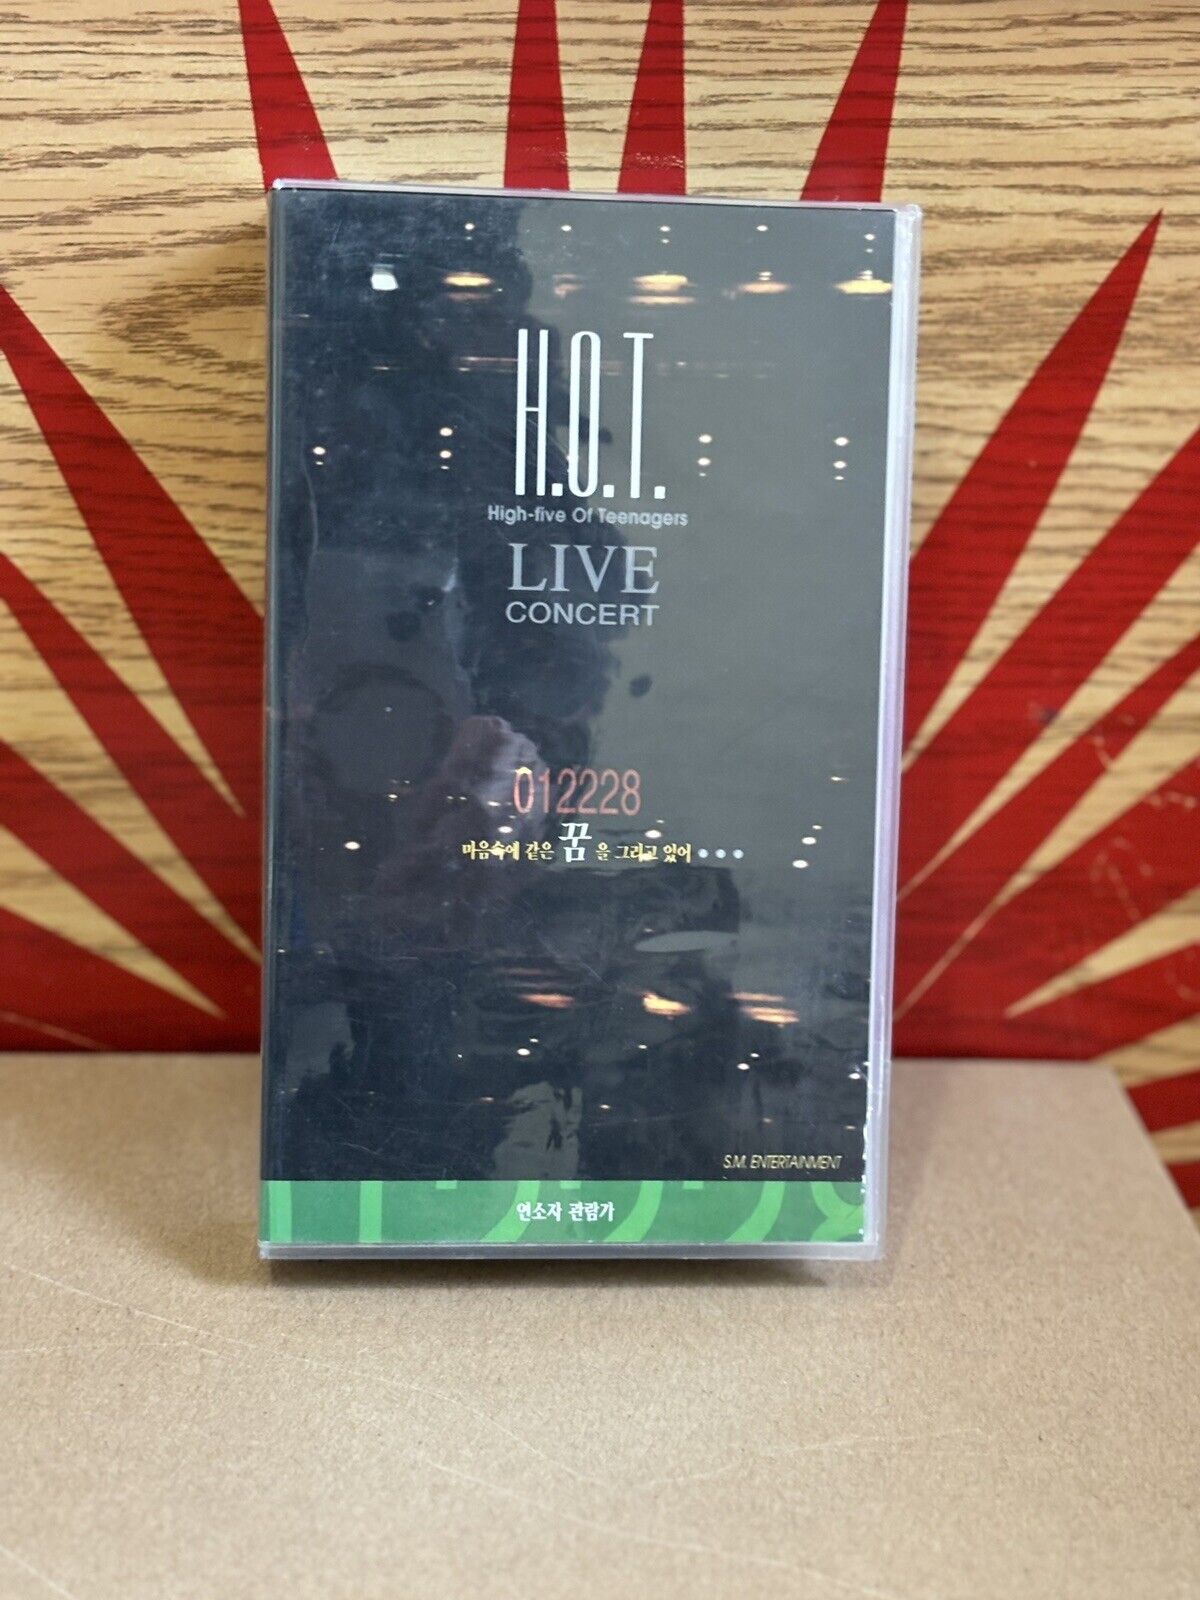 RARE Vintage 1999 H. O. T. High-five Of Teenagers Live Concert On VHS Korea